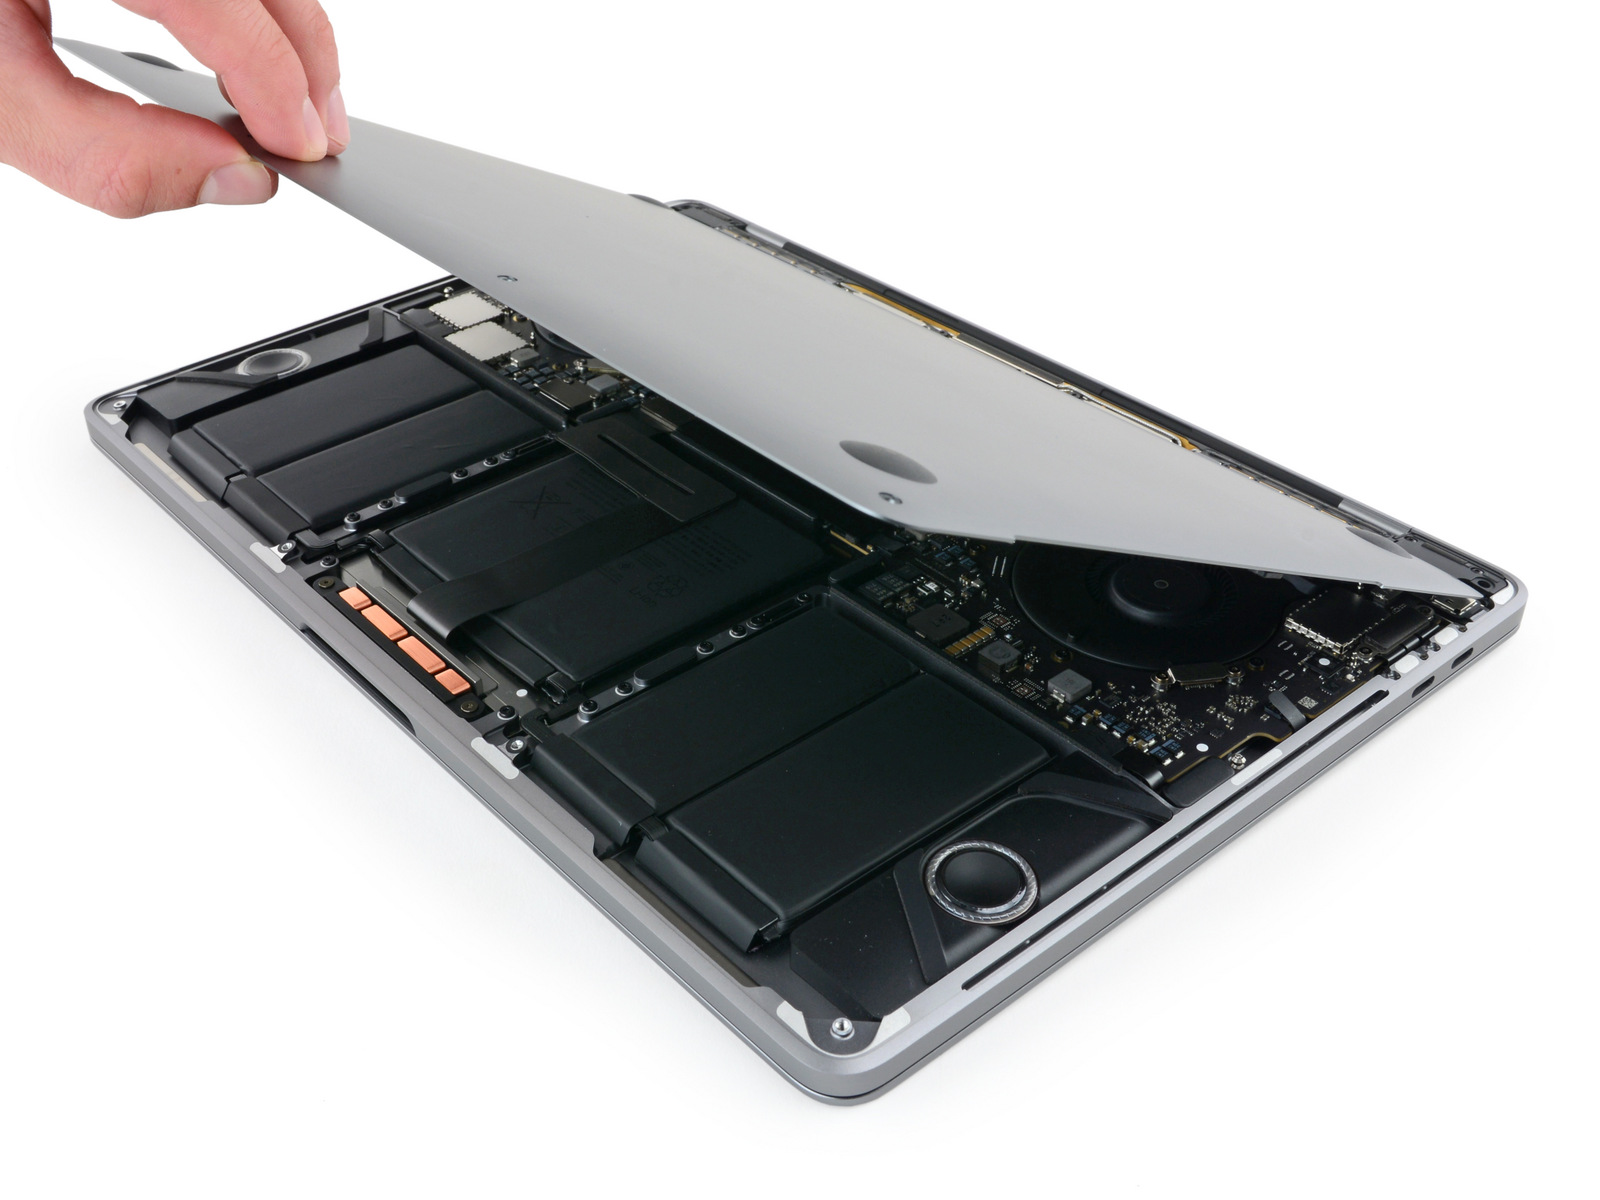 macbook pro early 2011 battery recall